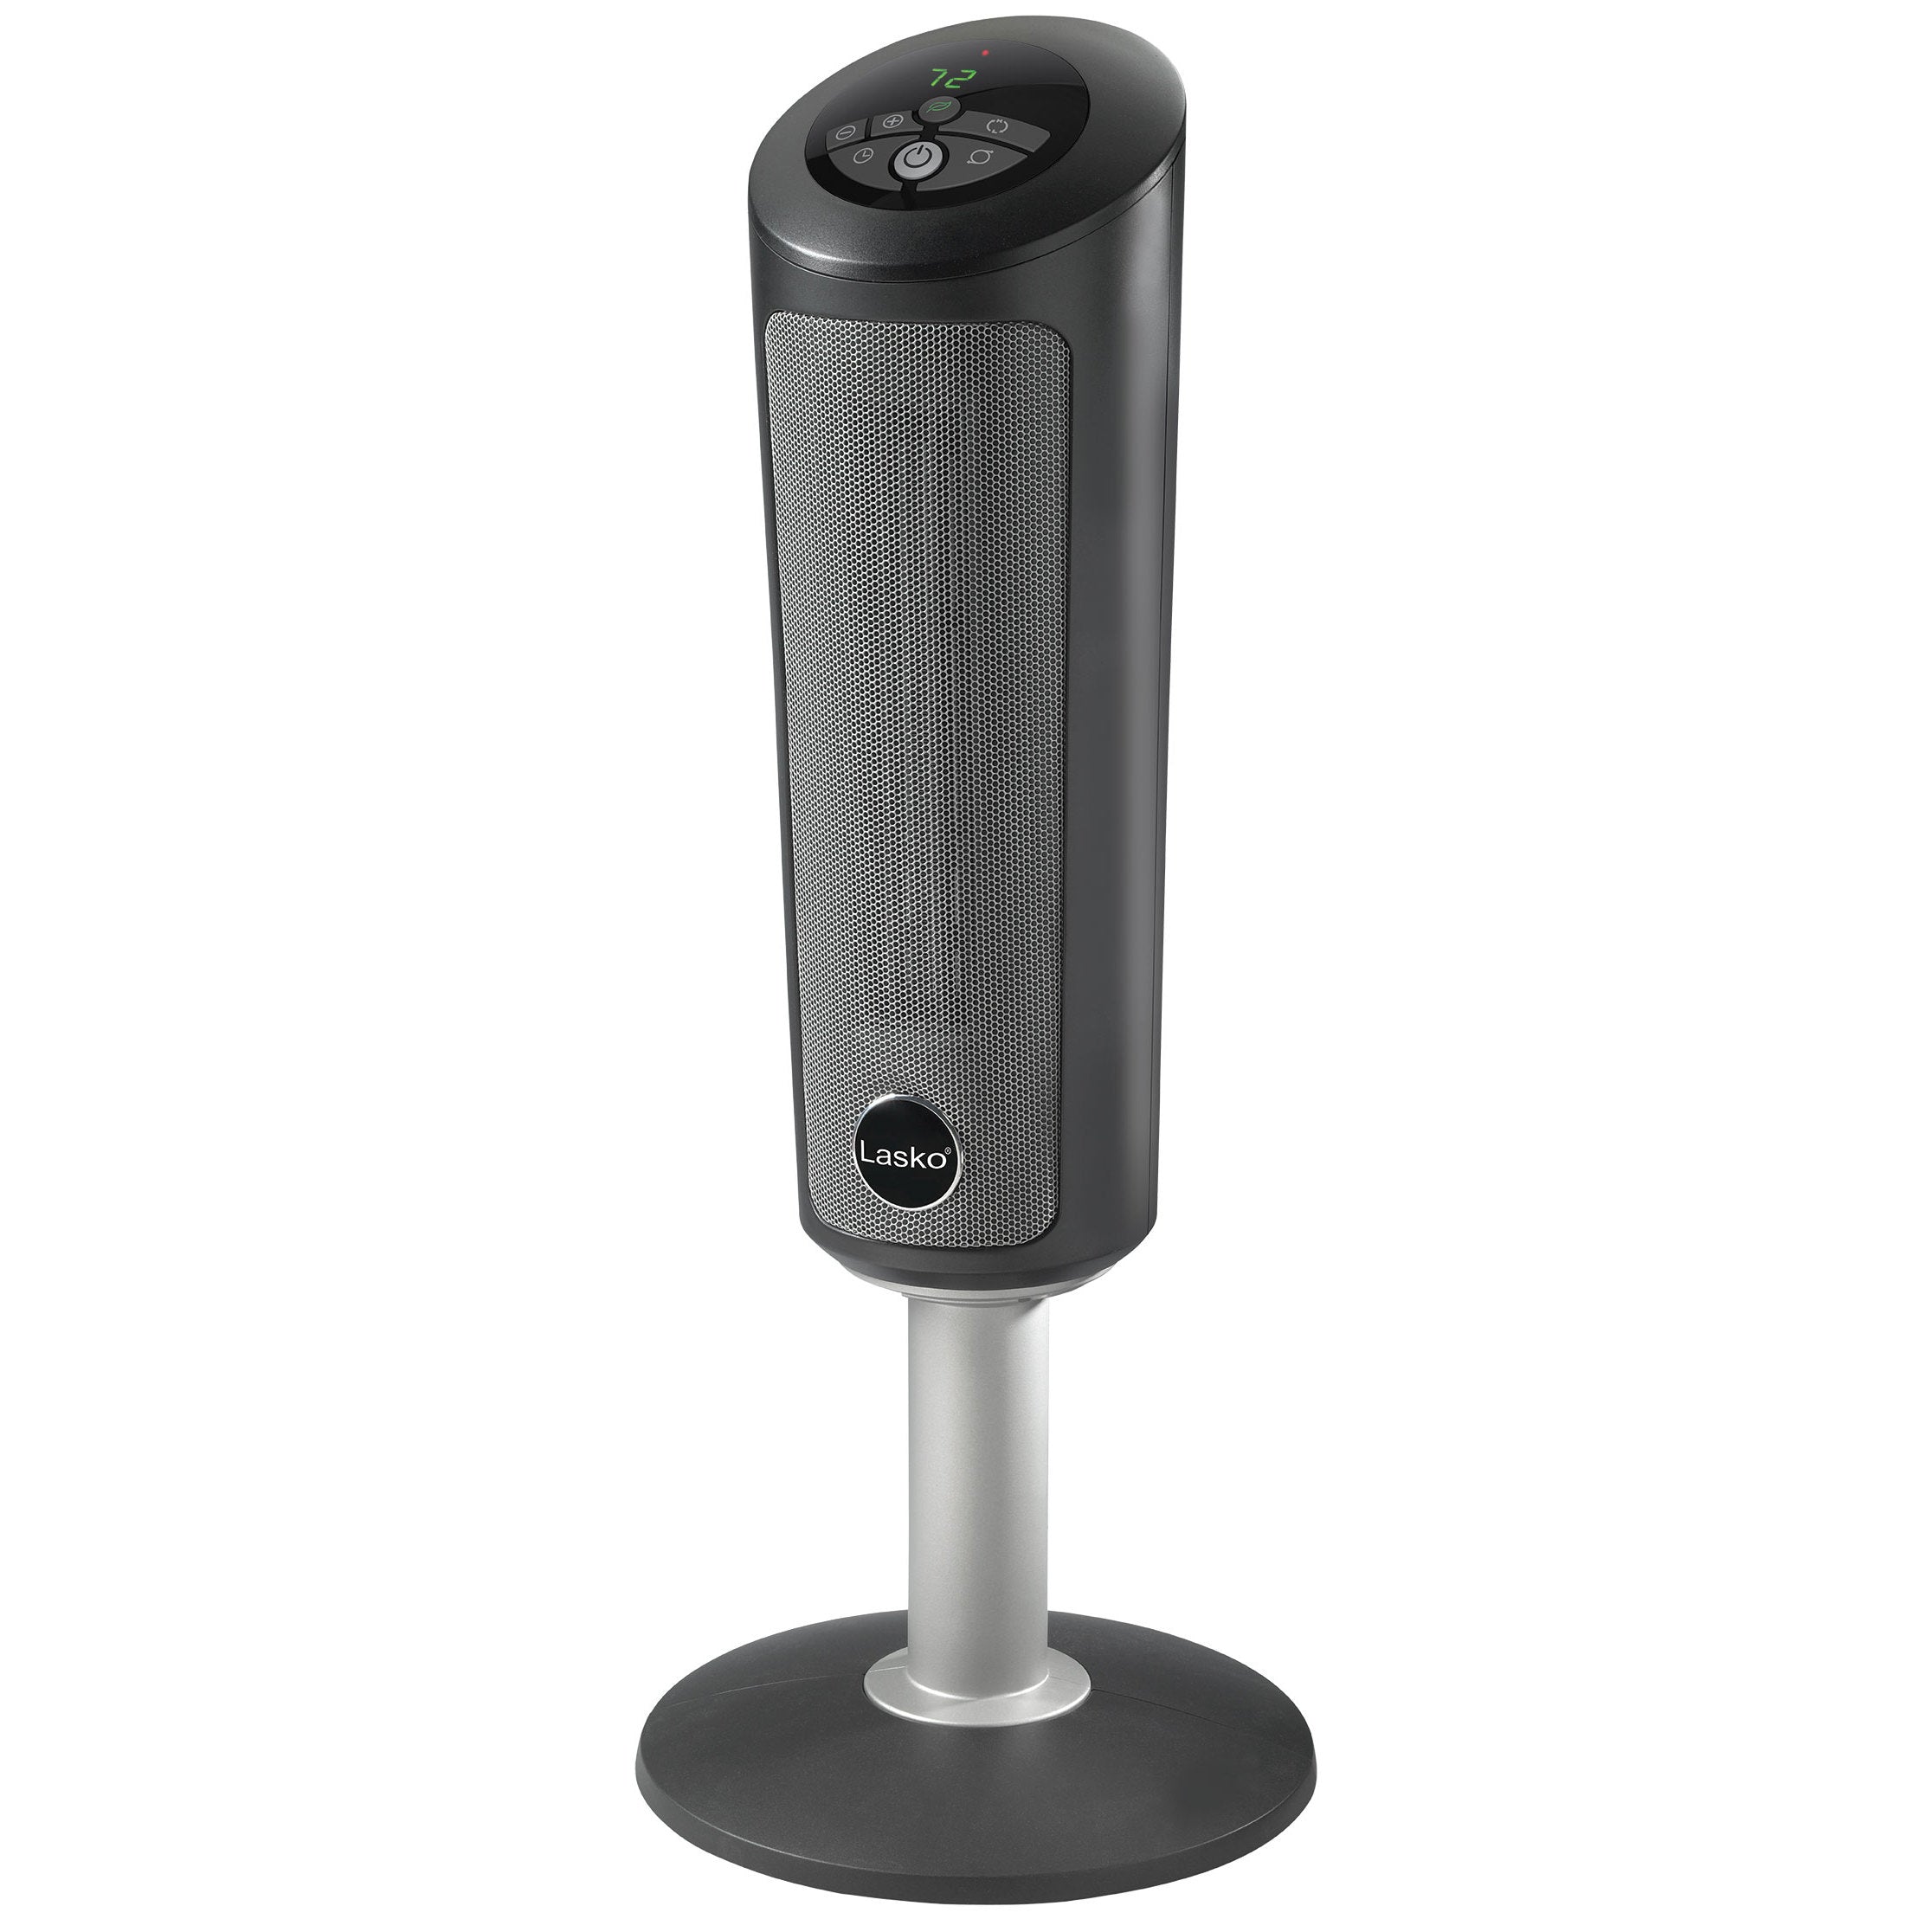 Lasko CS30368 Ceramic Pedestal Heater with Remote Control